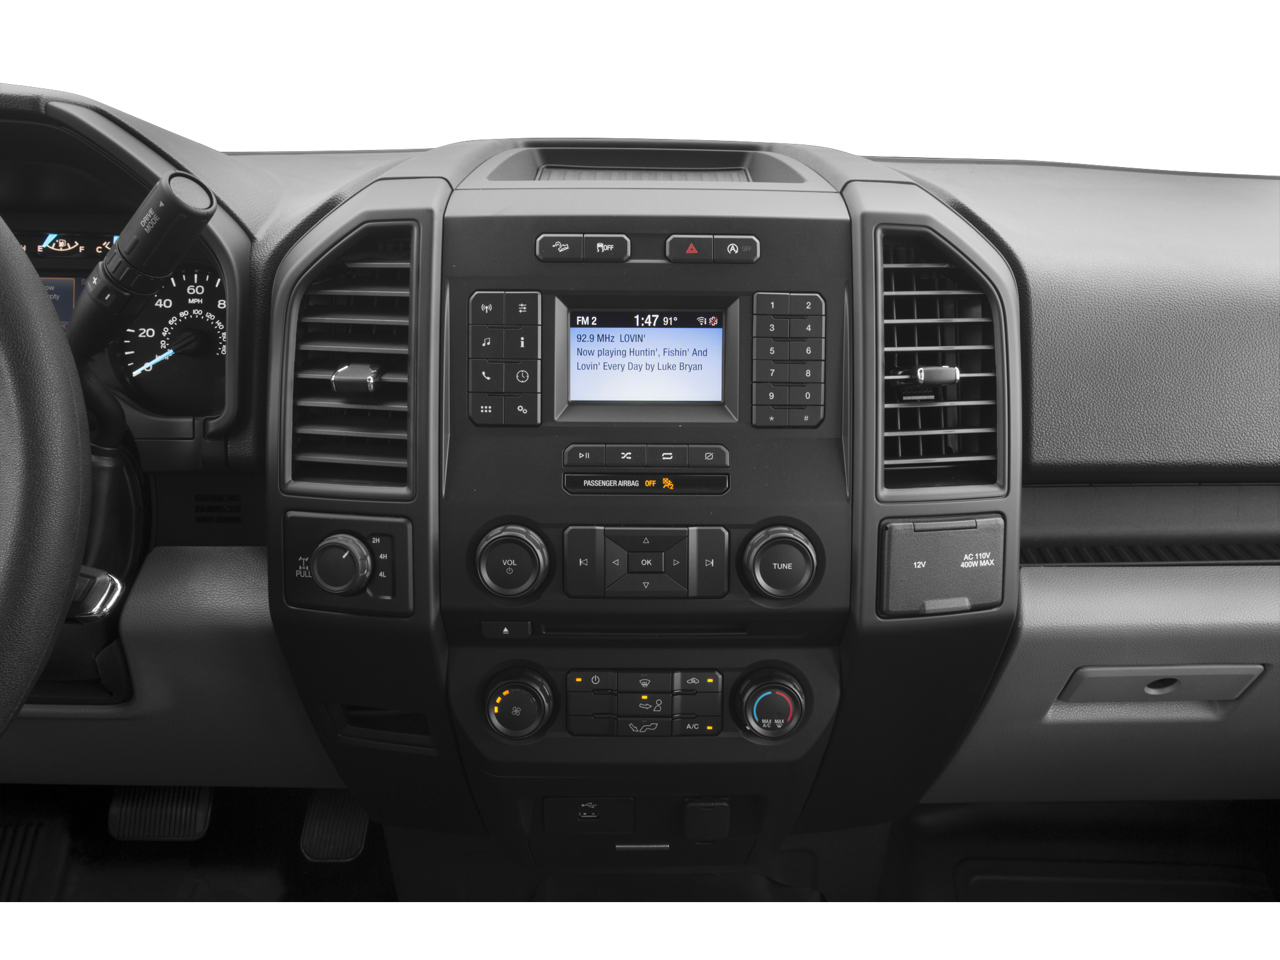 2020 Ford F-150 Lariat | Navigation | Sync 3 | BLIS | Remote Start | 4x4